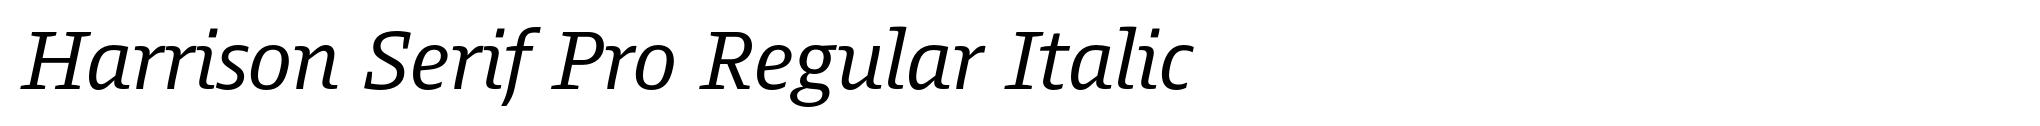 Harrison Serif Pro Regular Italic image